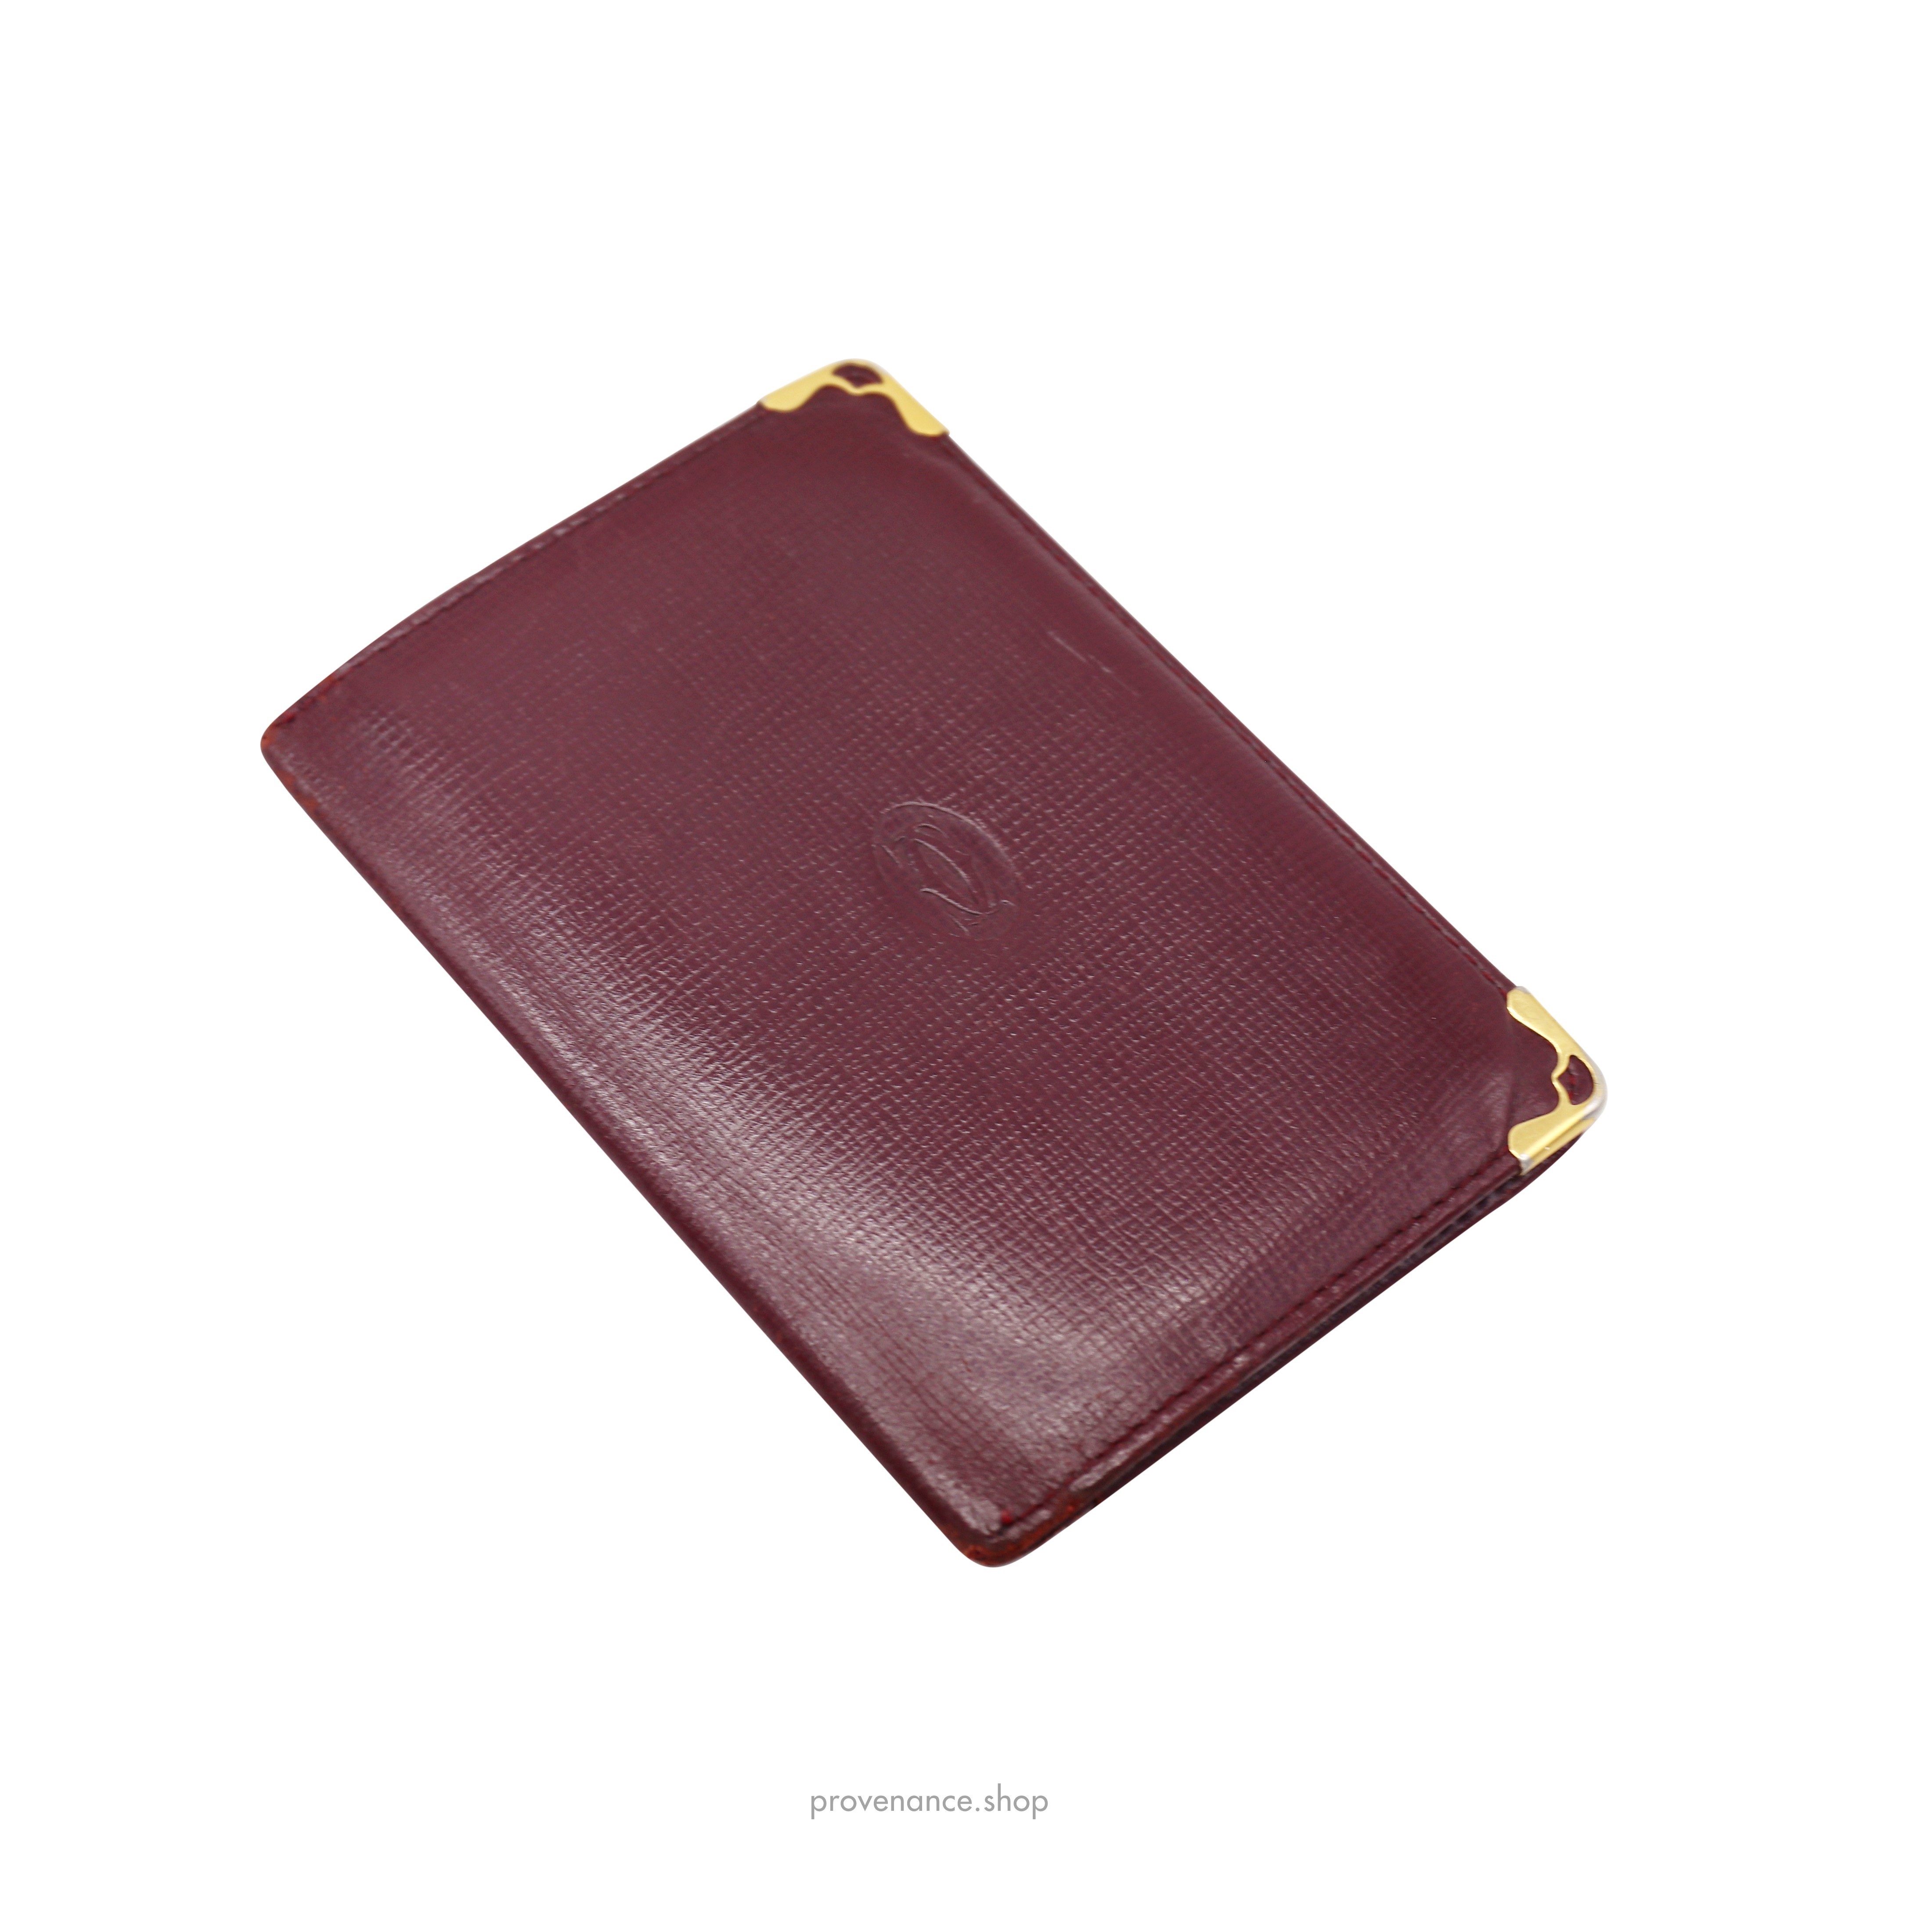 Pocket Organizer Wallet - Burgundy Leather - 3